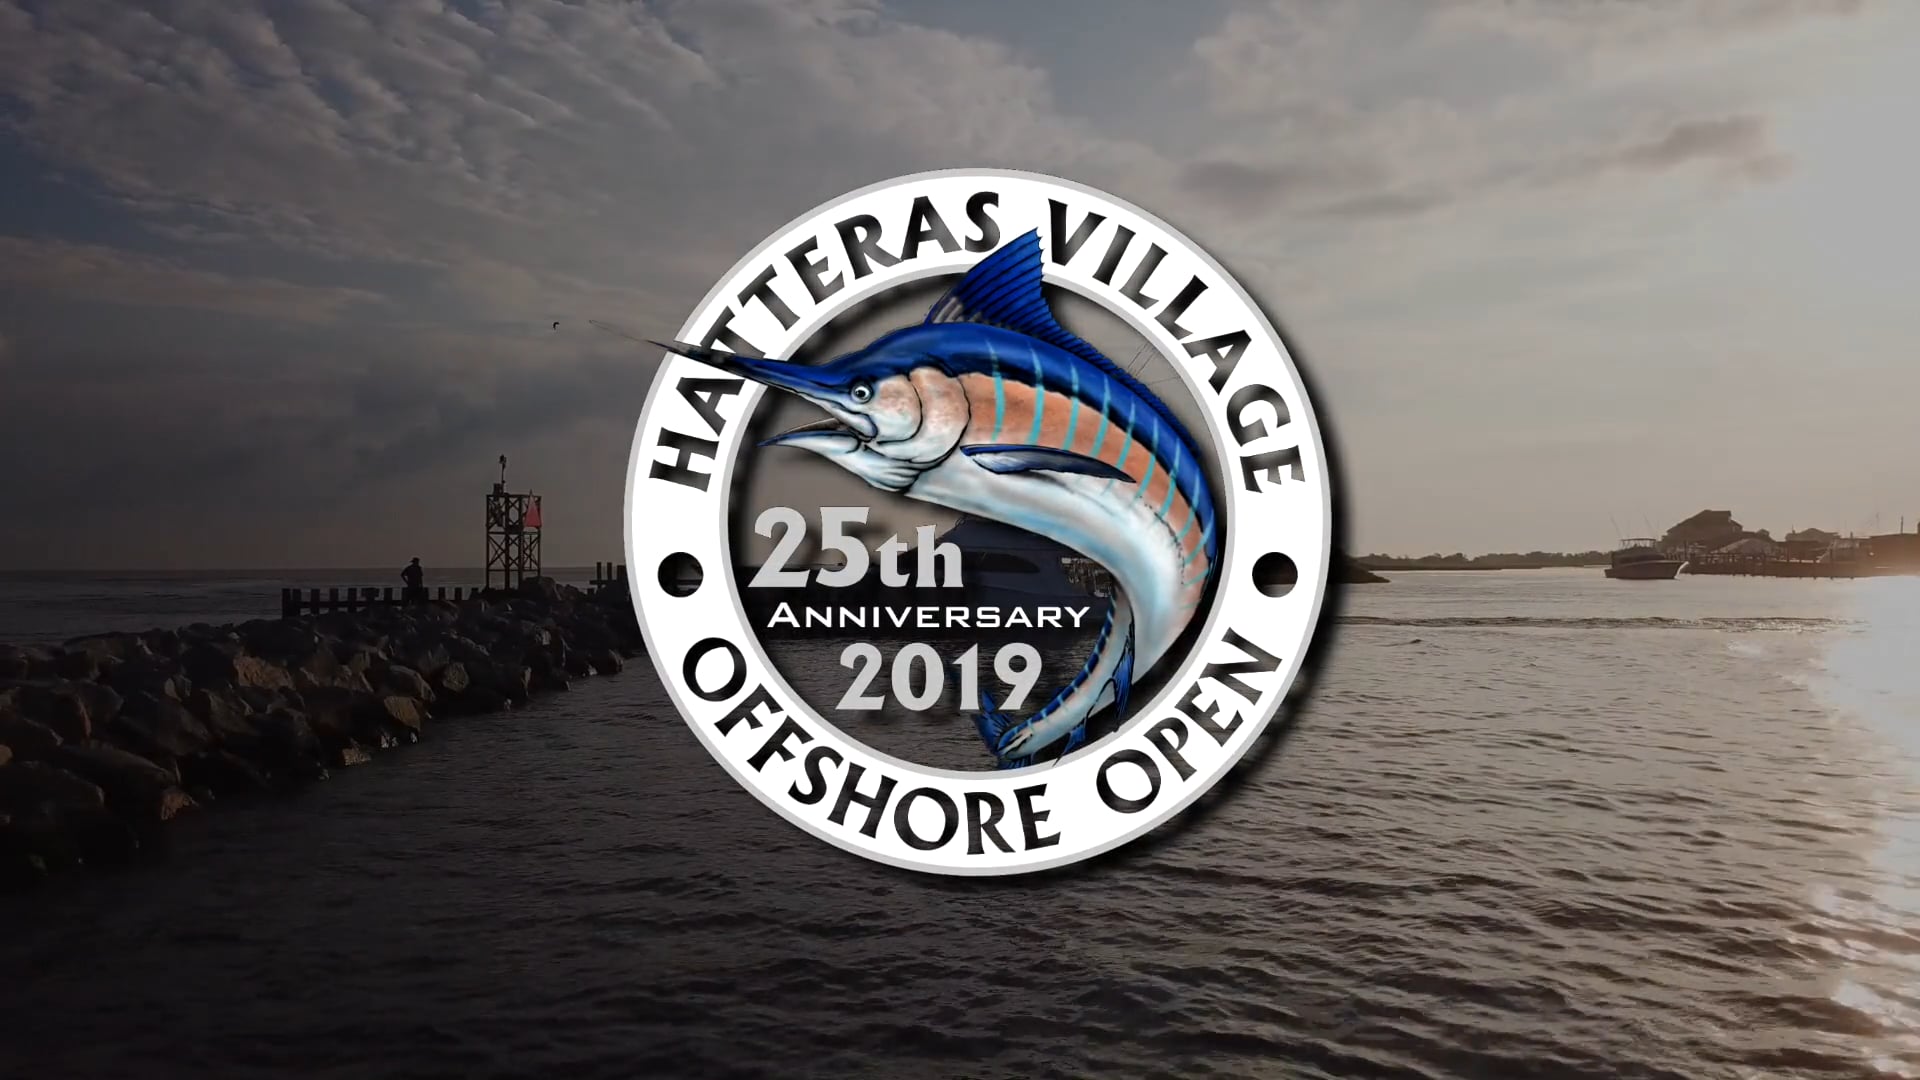 Hatteras Village Offshore Open 2019 preview video.